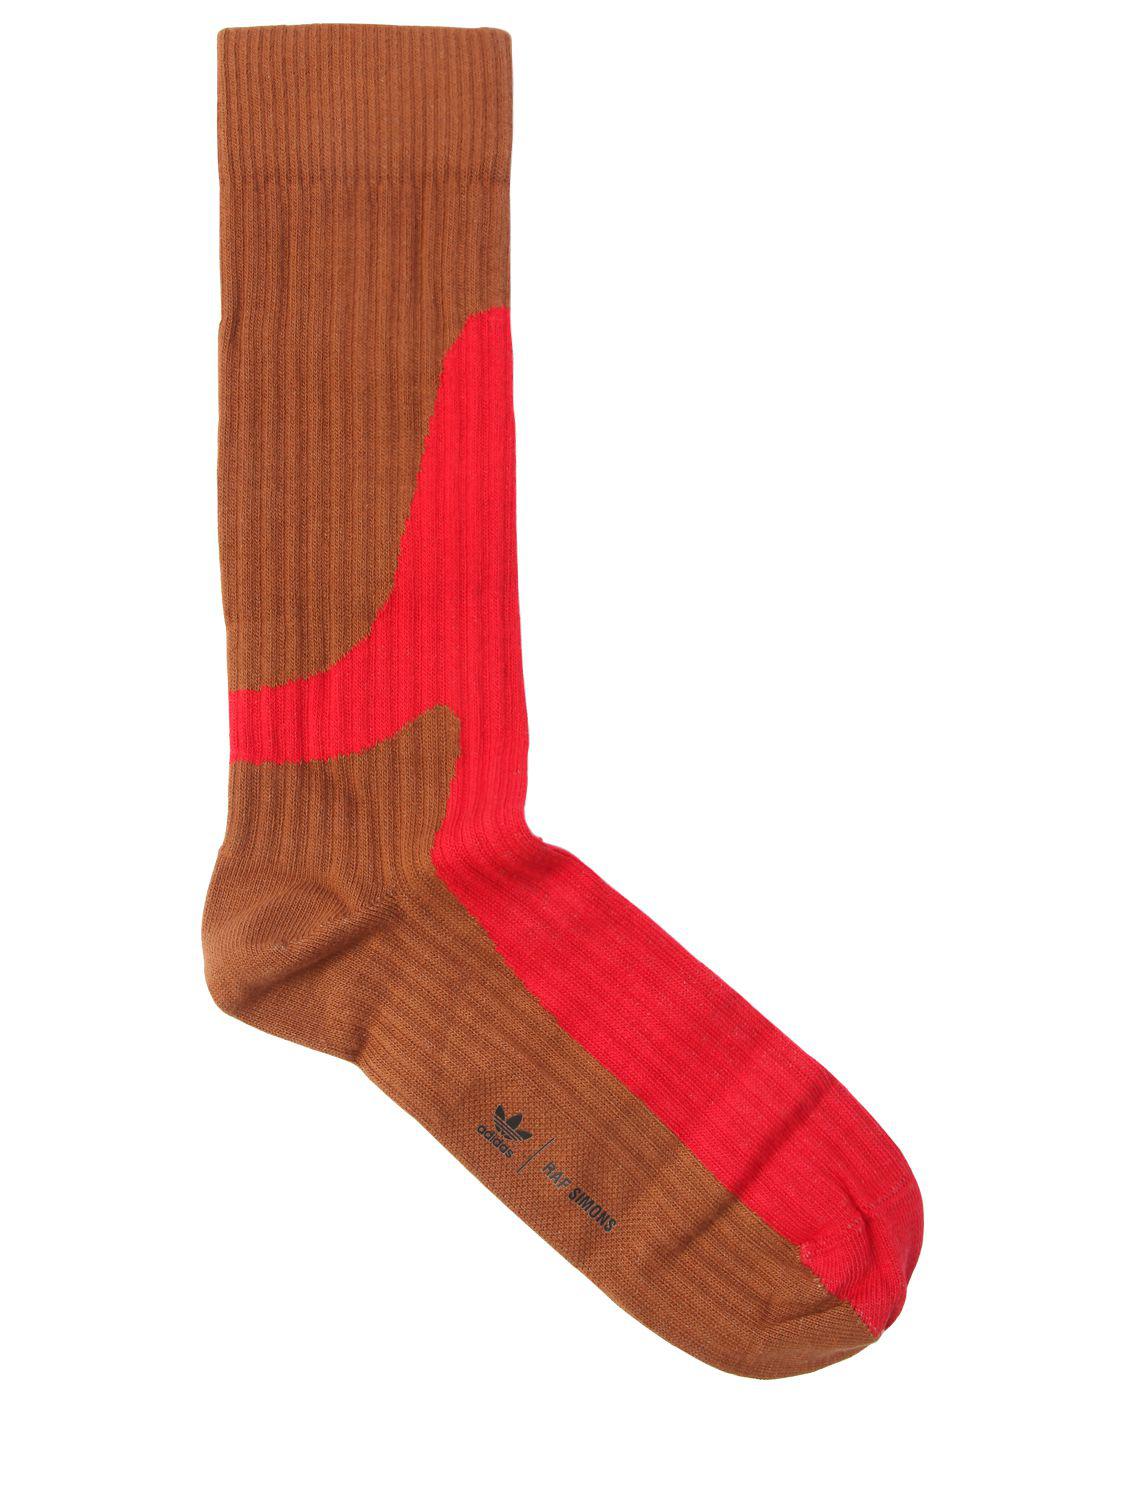 ozweego replicant socks